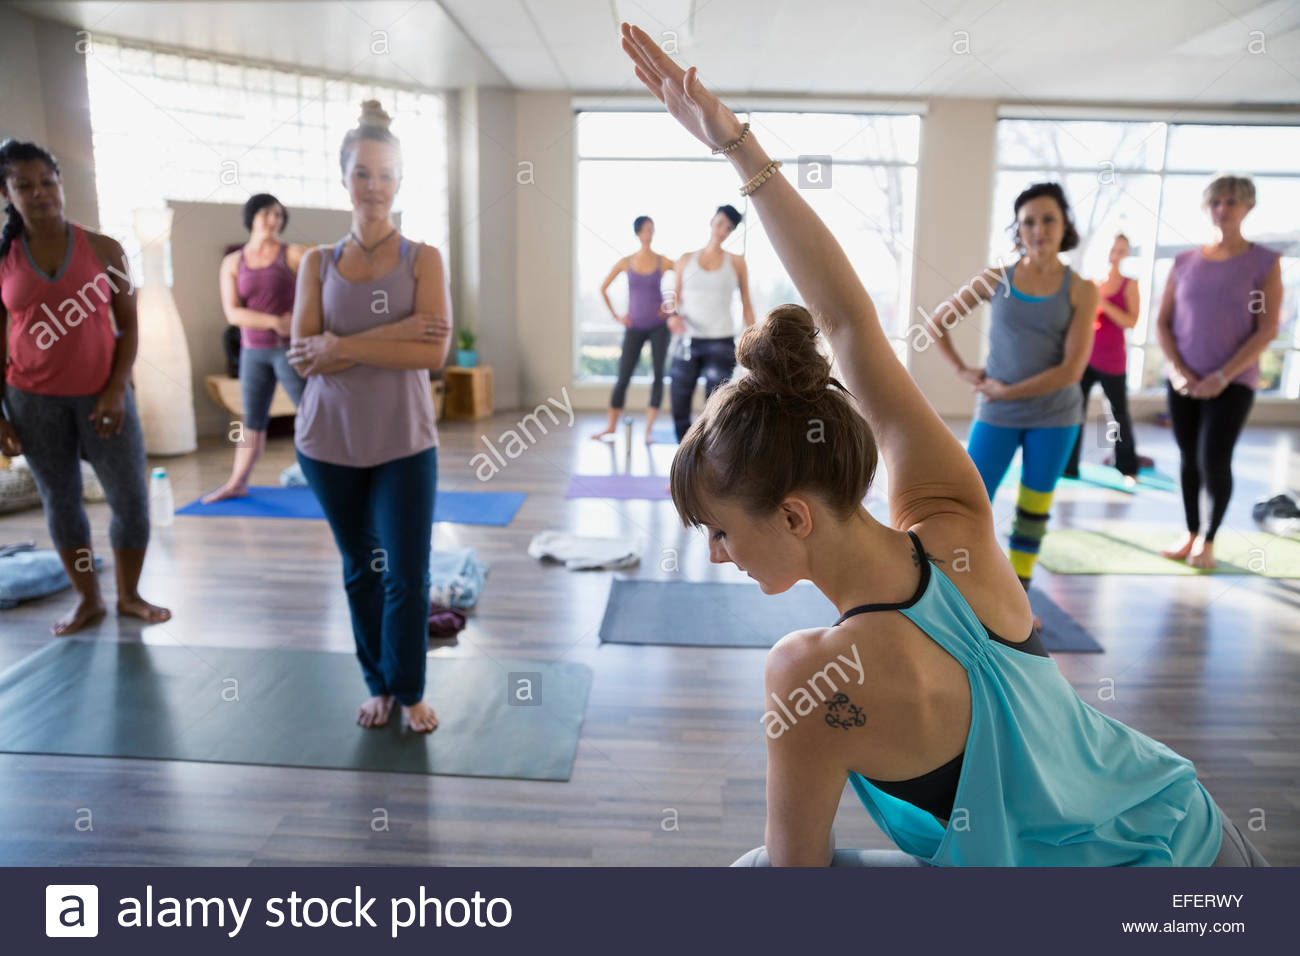 Yoga instructor demonstrating modified side angle pose Stock Photo